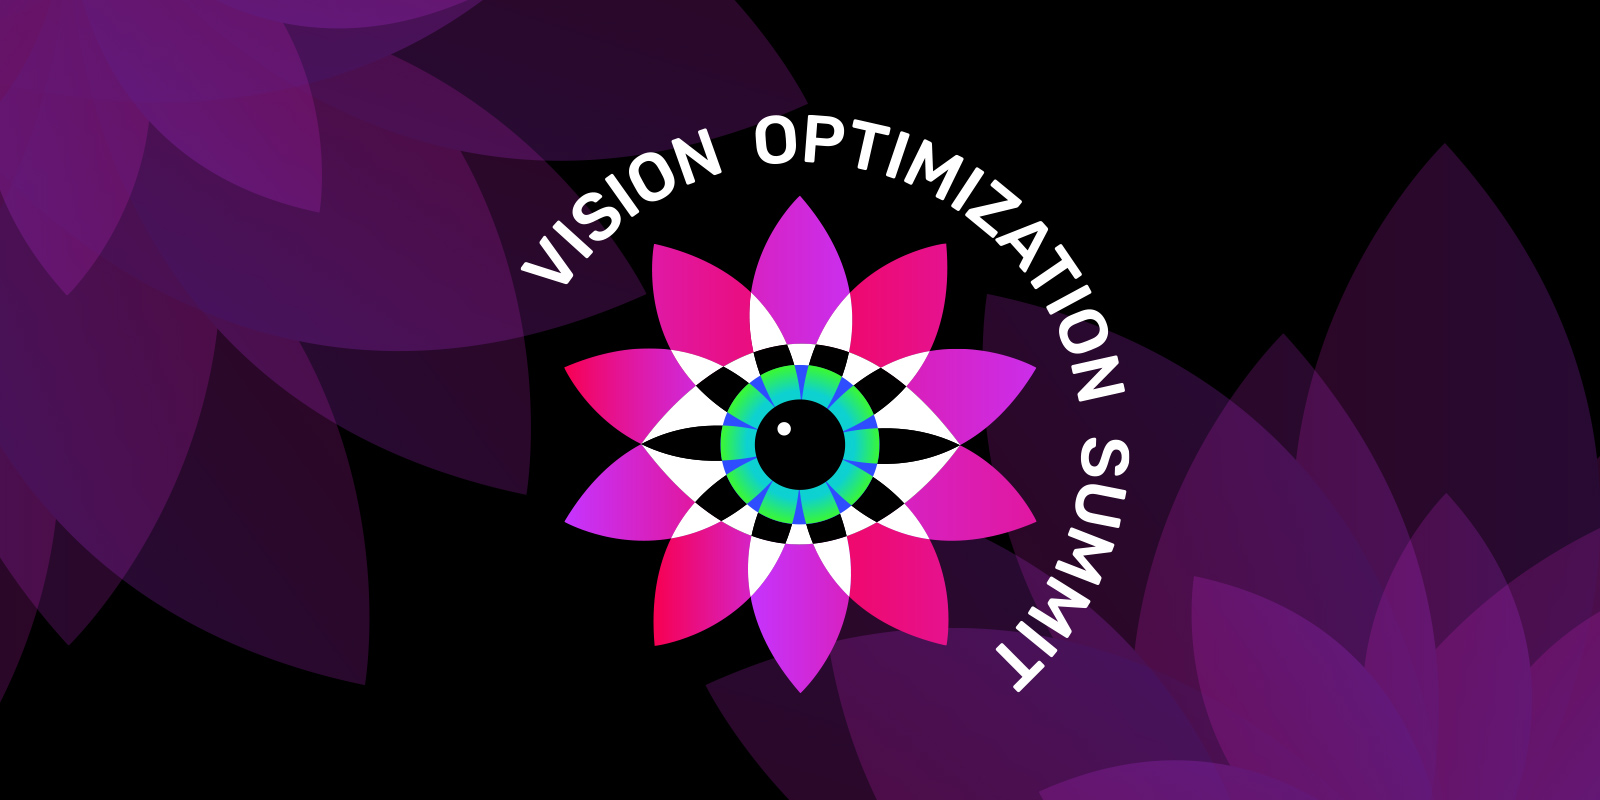 vision-optimization-summit-header